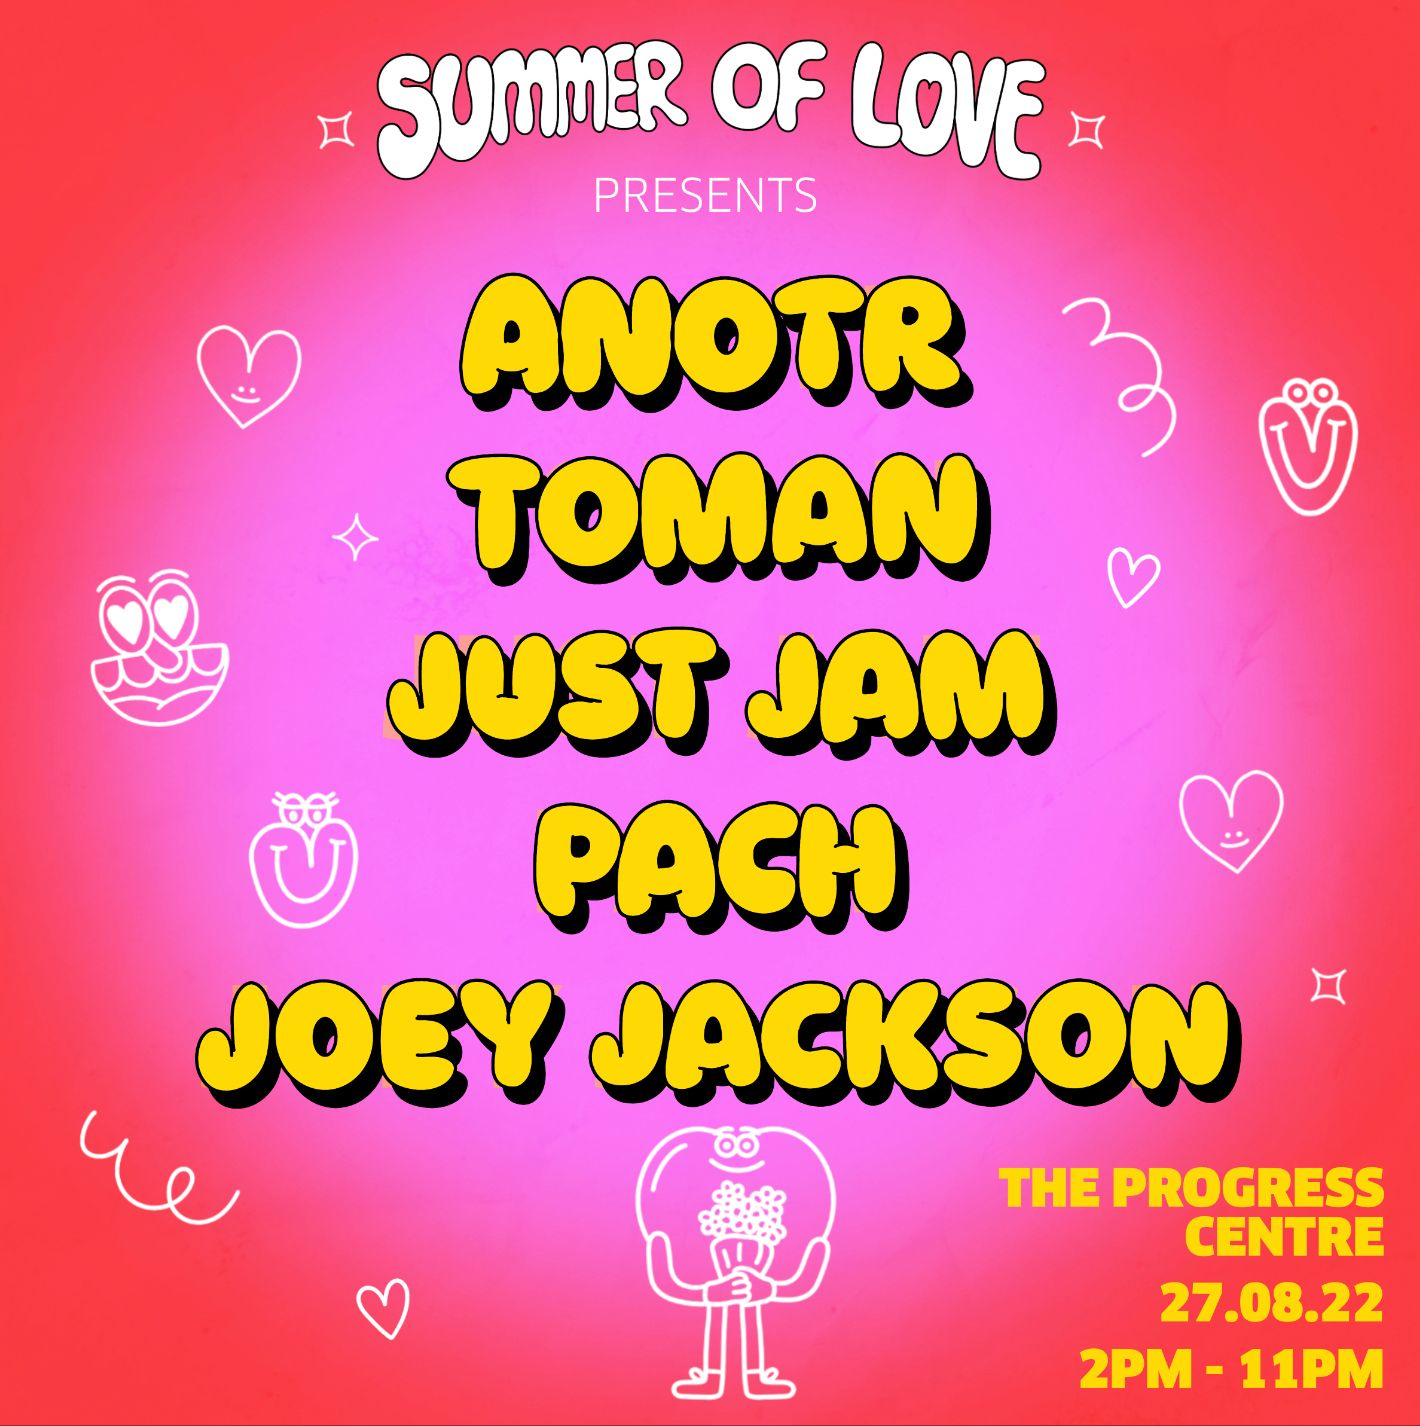 SOL presents: ANOTR, Toman, PACH, Just Jam, Joey Jackson - Flyer back